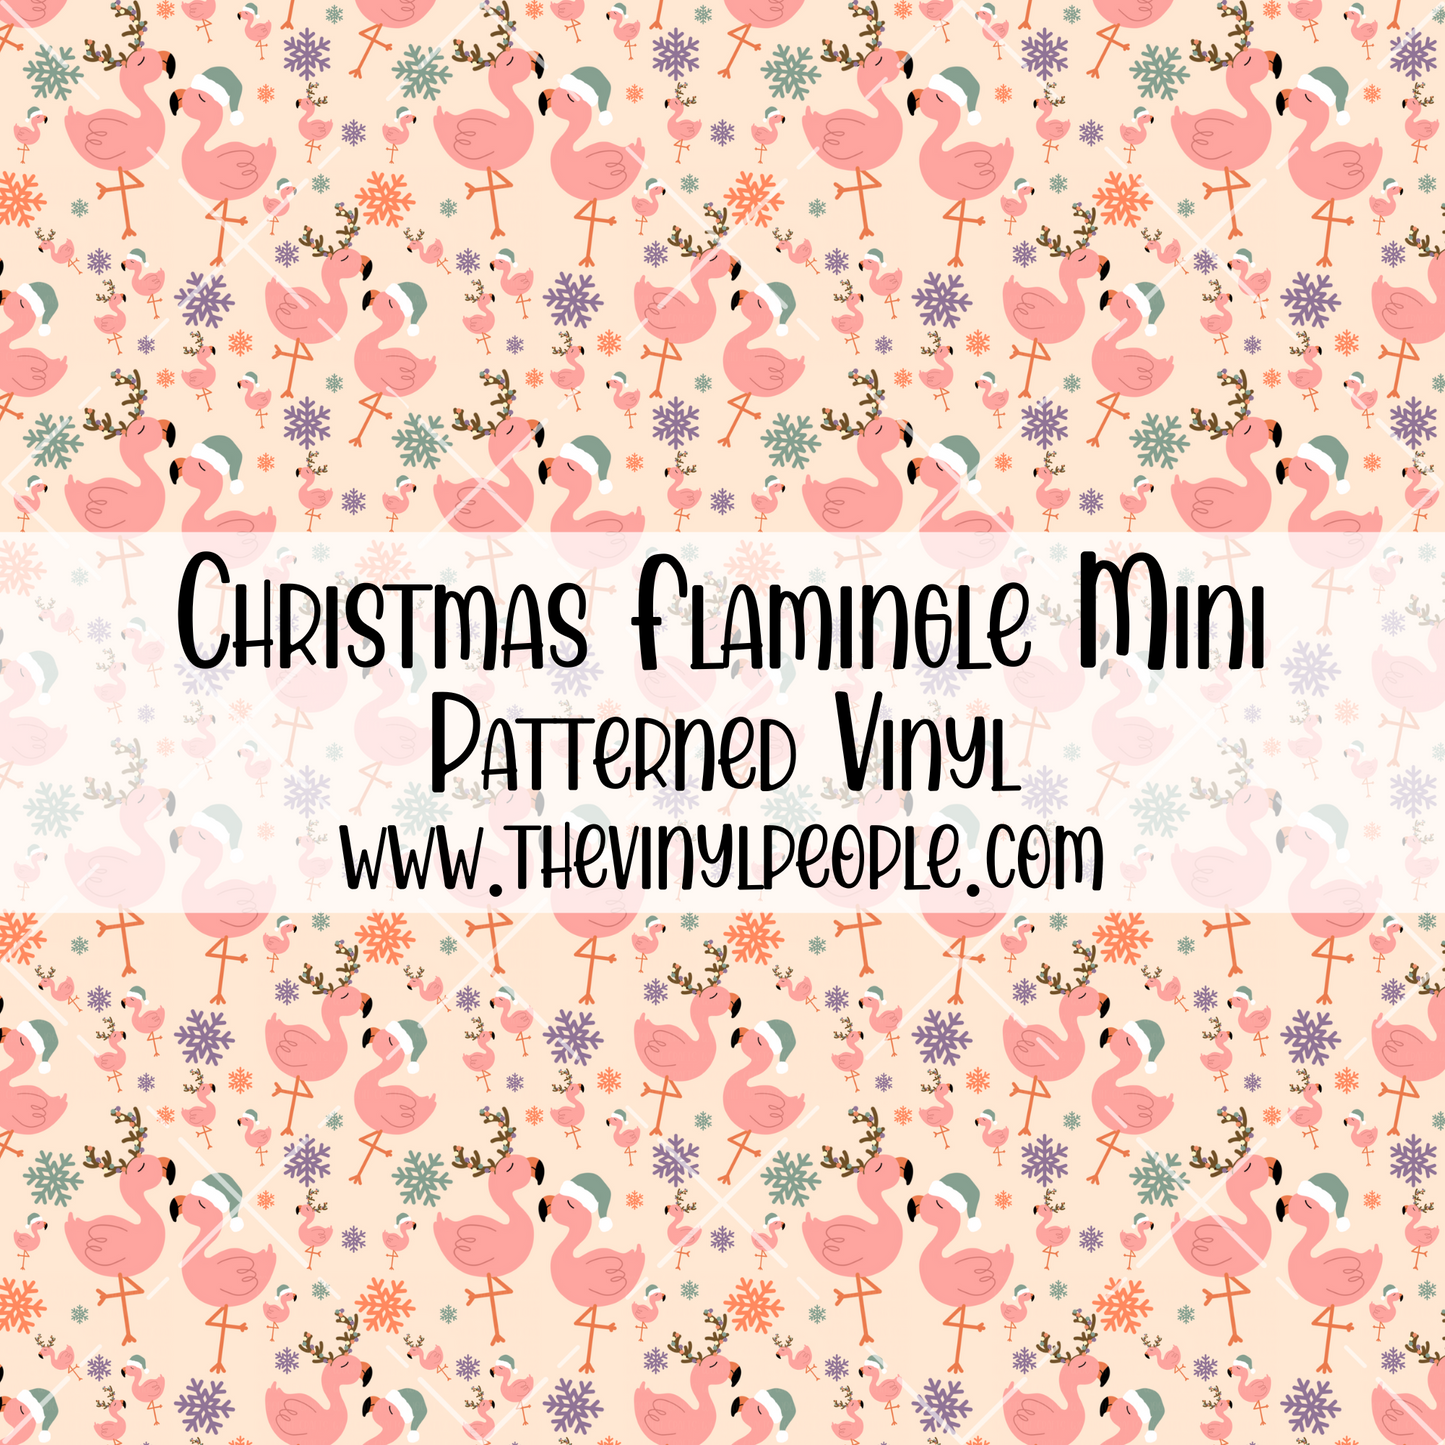 Christmas Flamingle Patterned Vinyl